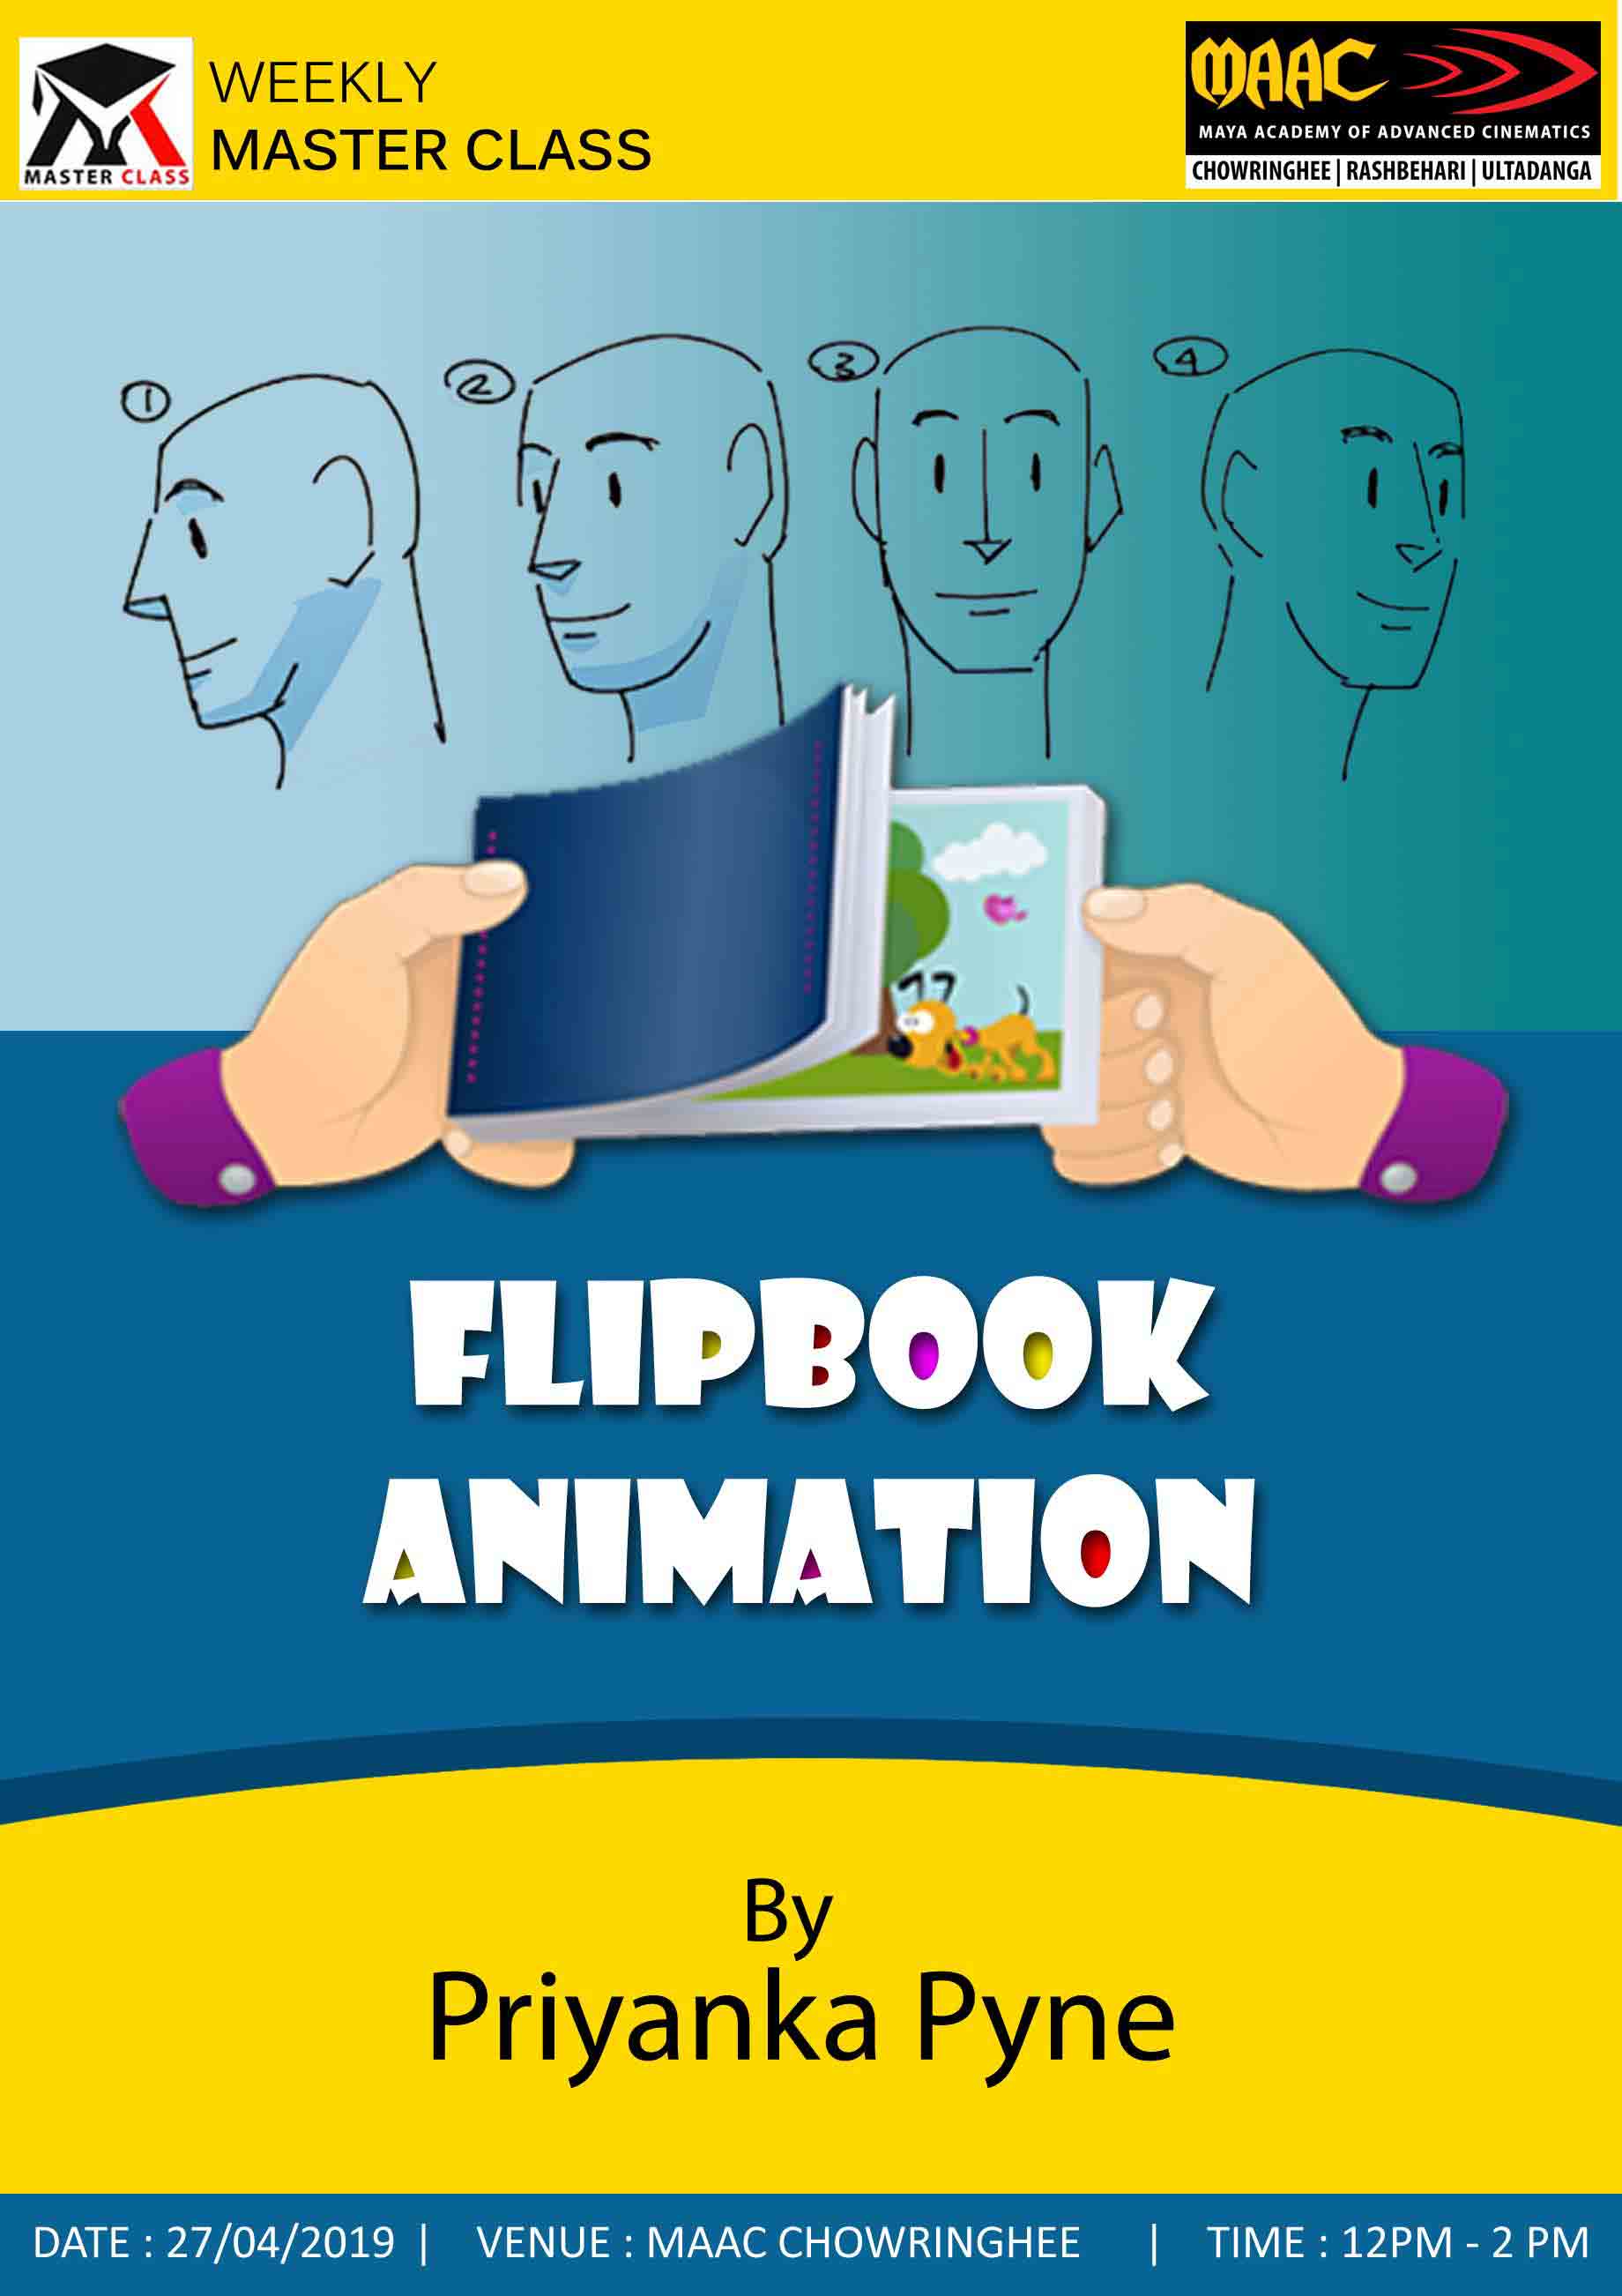 Weekly Master Class on Flipbook Animation